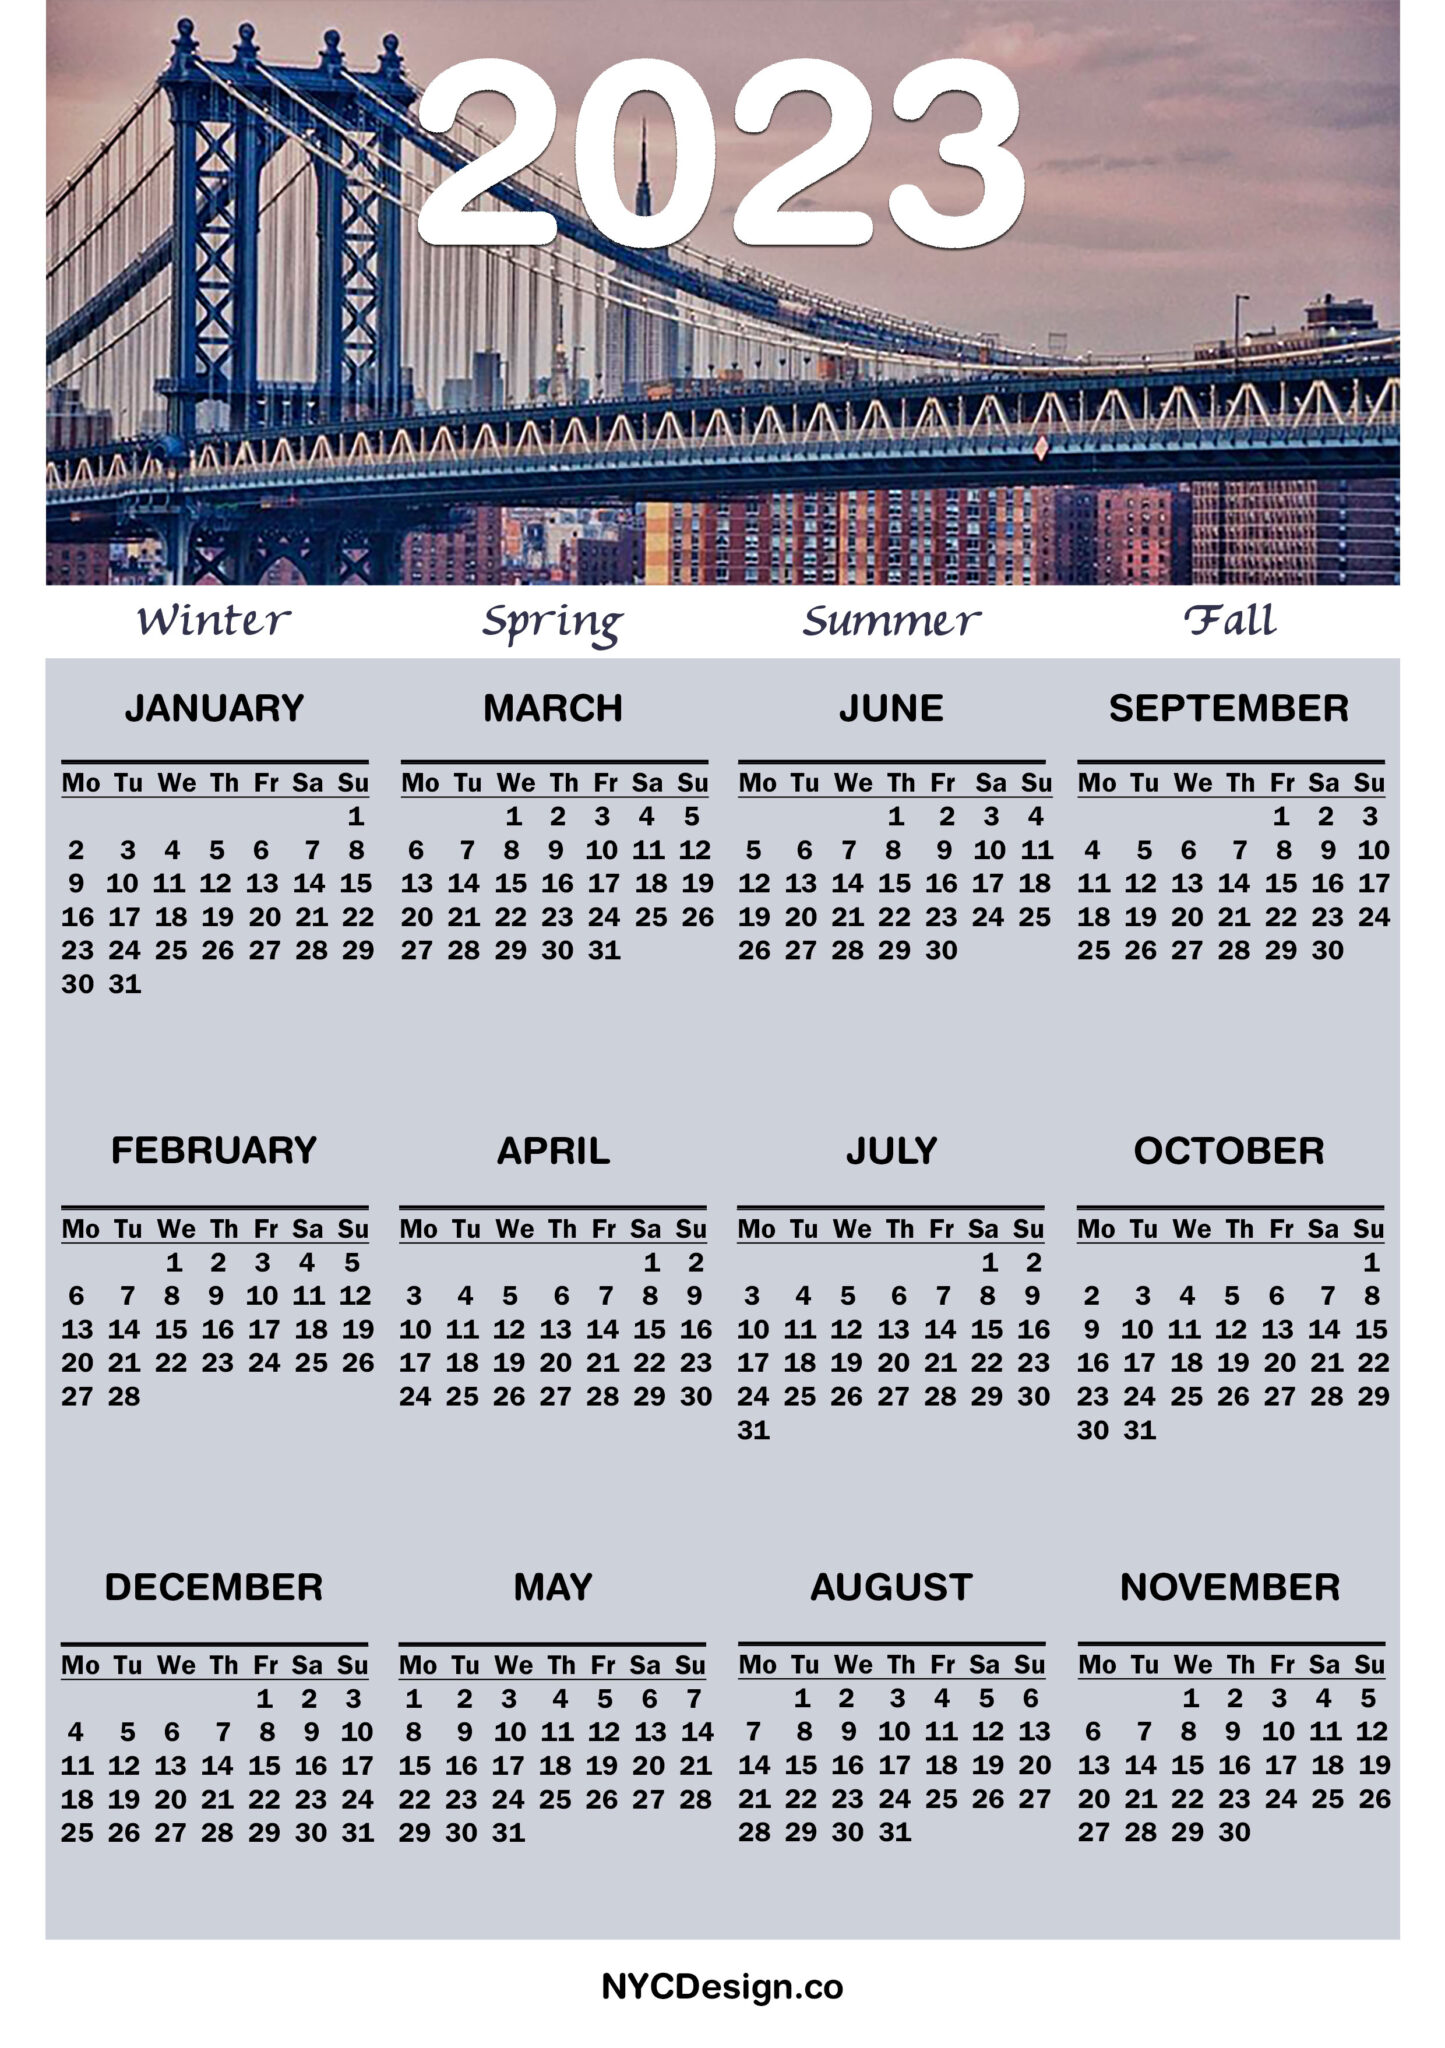 nyc-asp-calendar-printable-calendar-2023